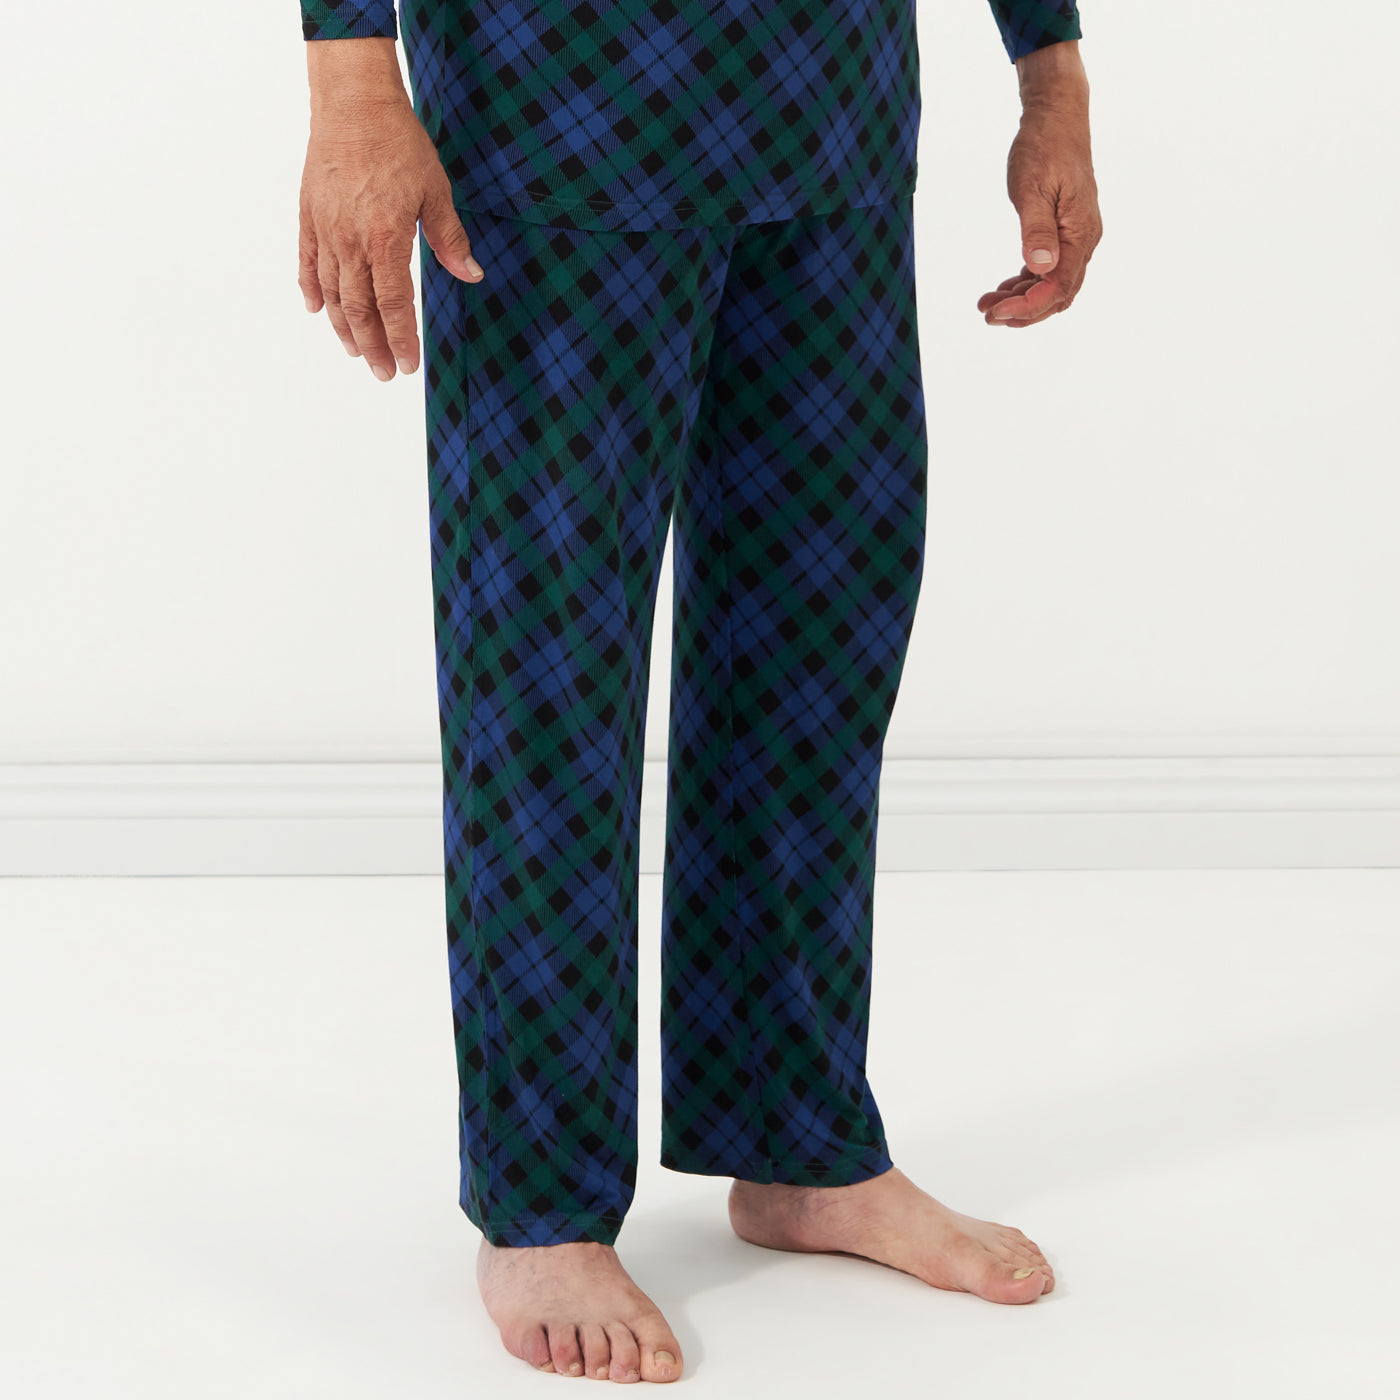 Close up image of a man wearing Emerald Plaid men's pajama pants